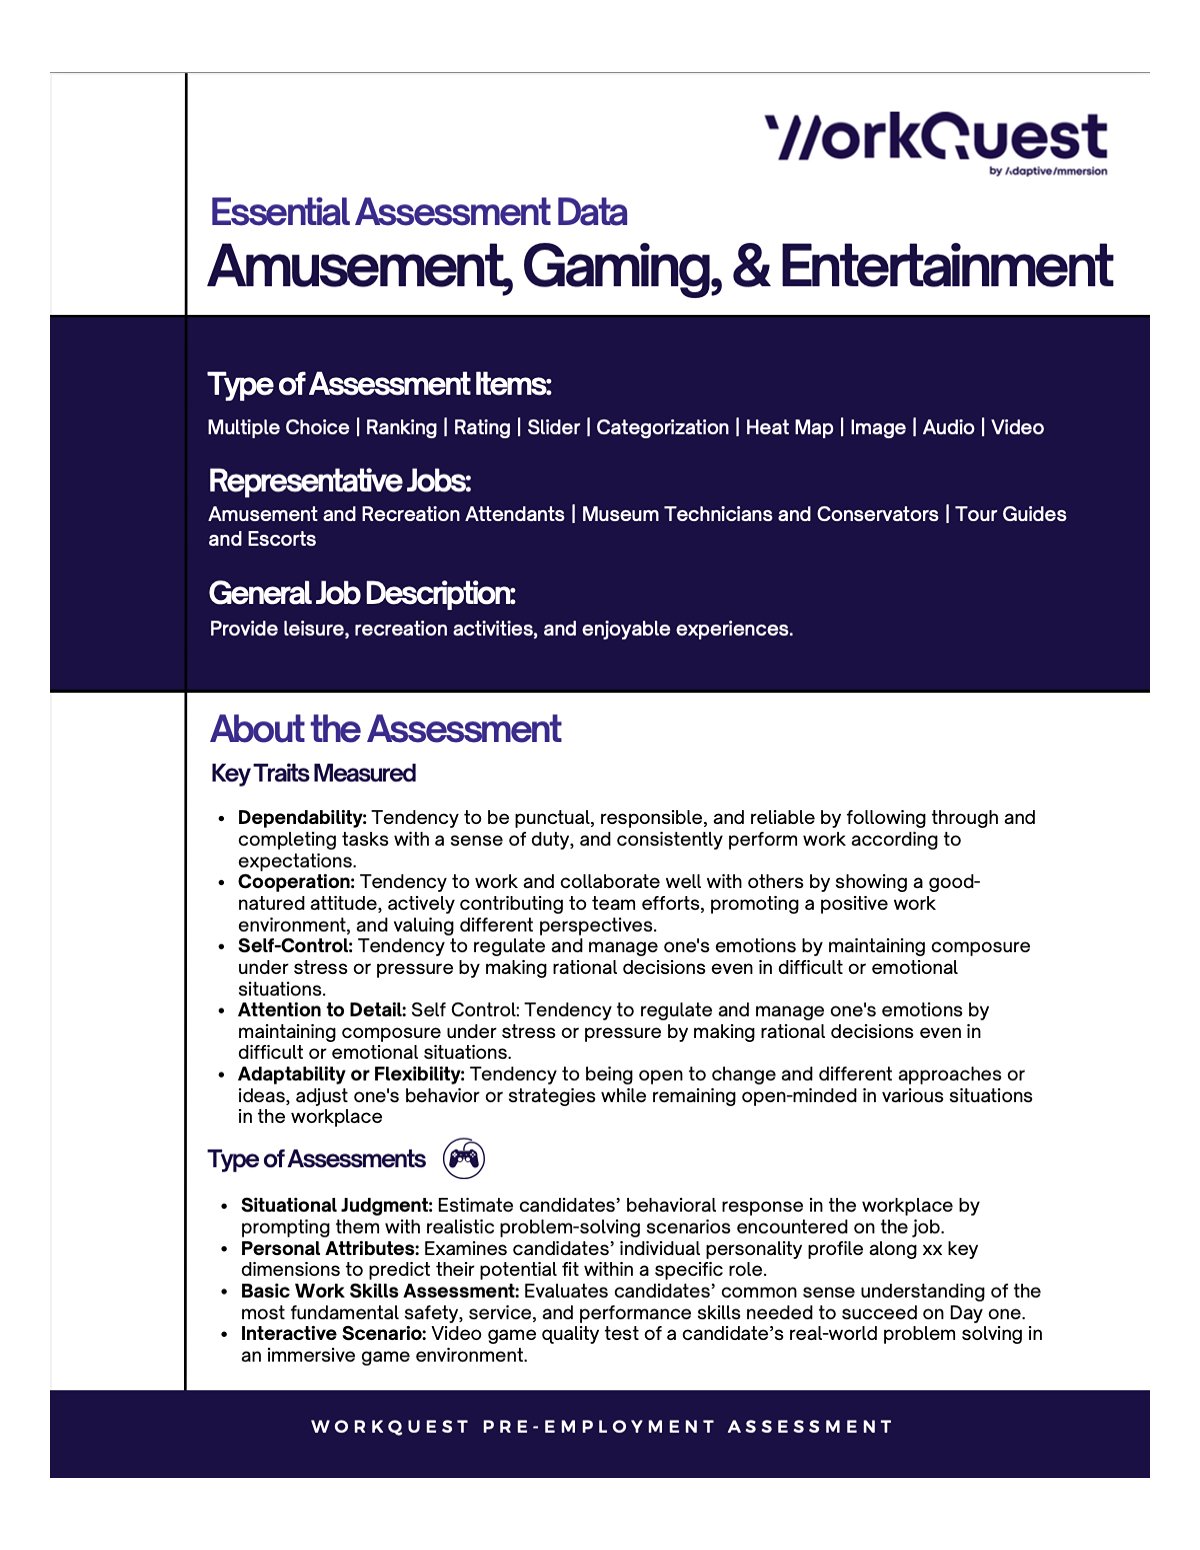 Amusement, Gaming, & Entertainment Industry Assessment